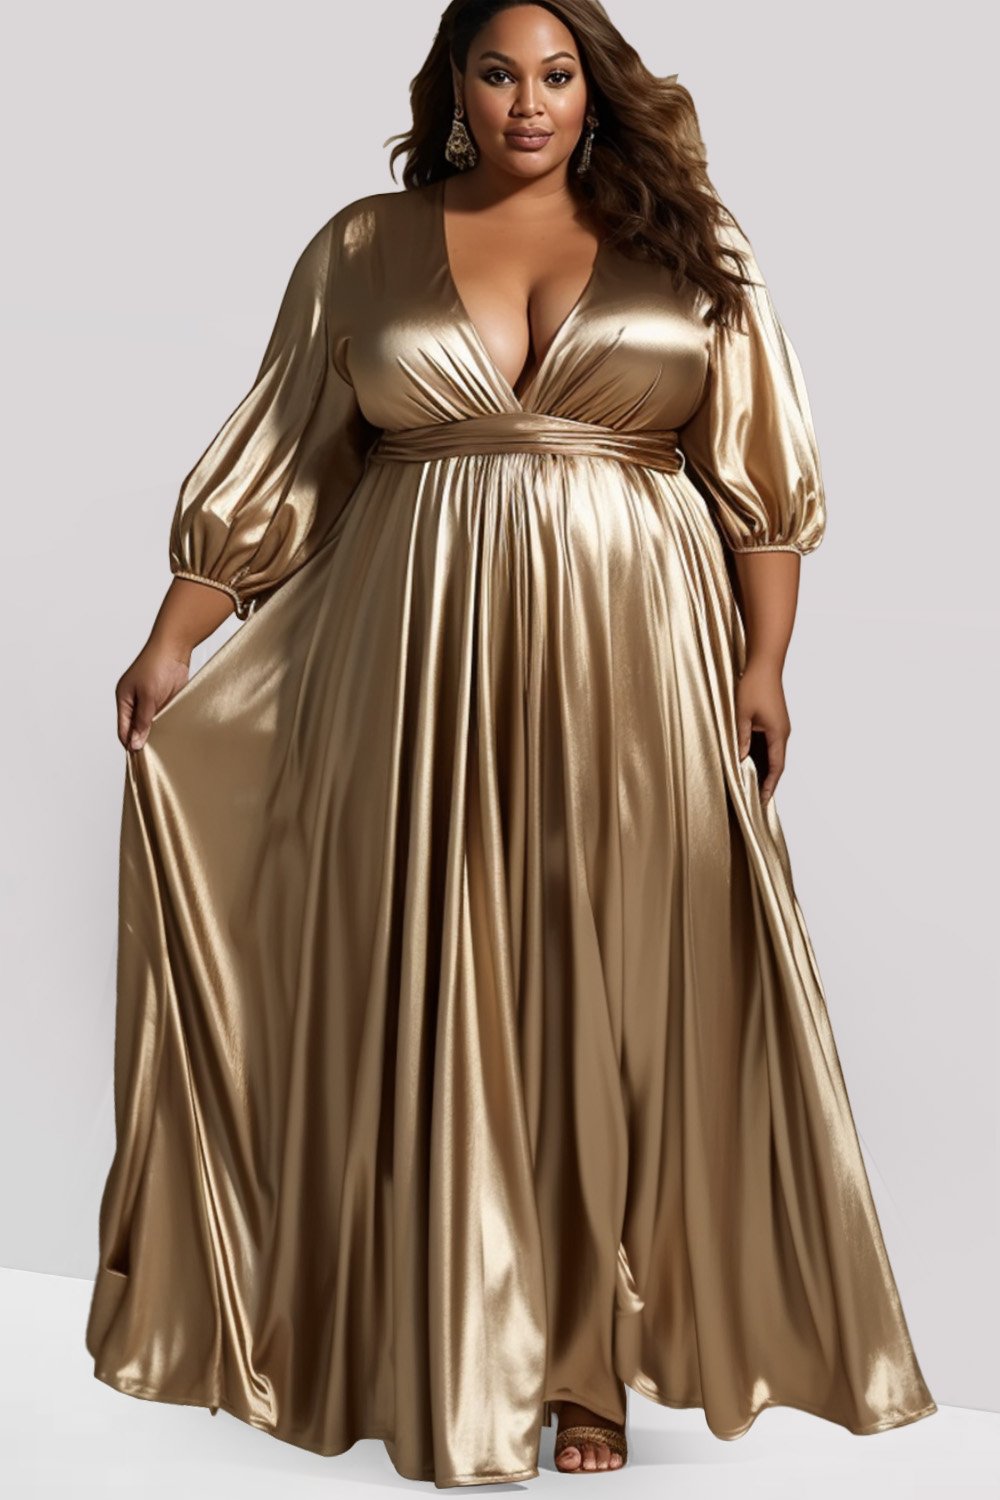 Xpluswear Design Plus Size Formal Maxi Dresses Elegant Gold Fall Winter Wrap Neck 3/4 Sleeve Pleated Metallic Glitter Fabric Maxi Dresses [Pre-Order]